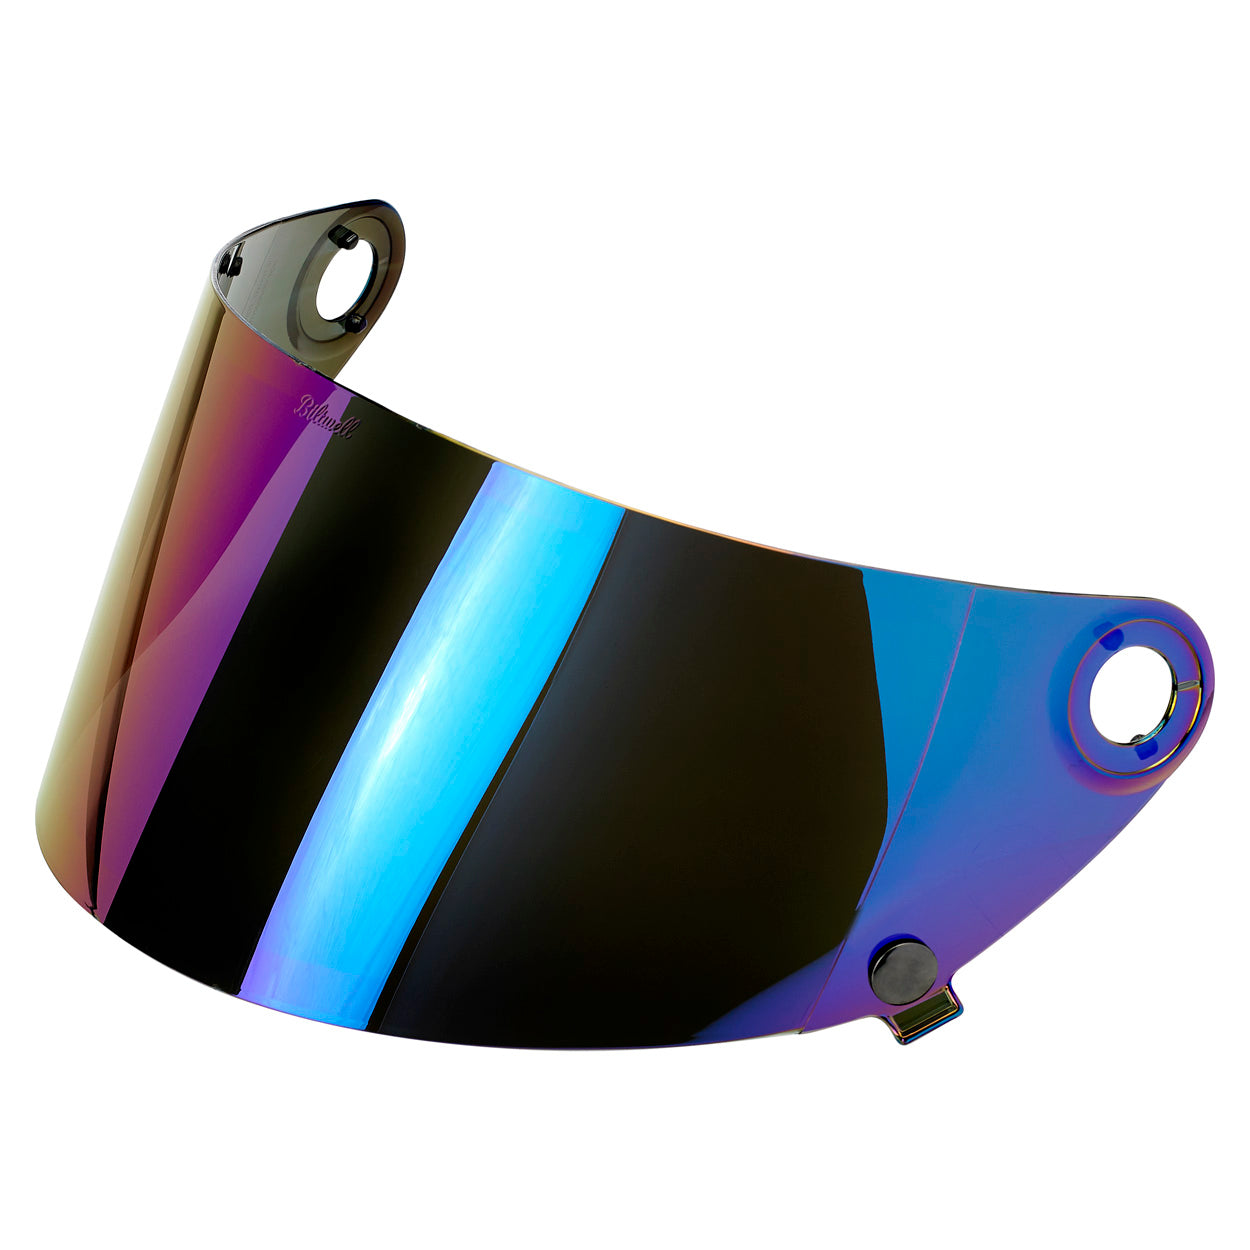 Gringo S Gen 2 Flat Shield - Rainbow Mirror